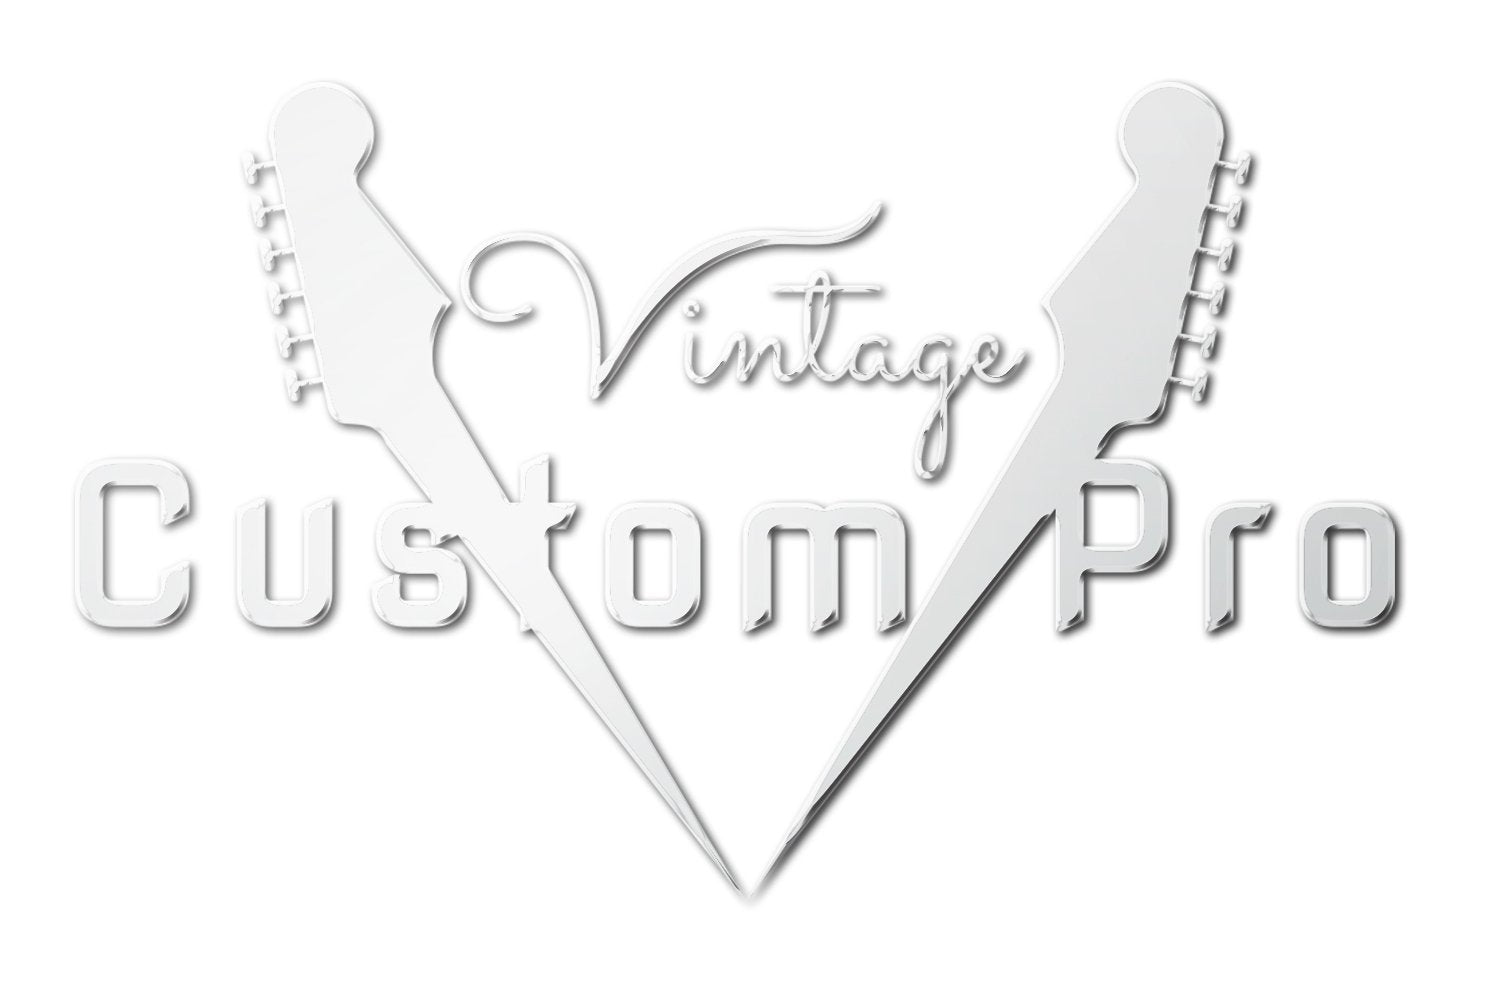 Vintage* V100IT Electric Guitar, Electric Guitar for sale at Richards Guitars.